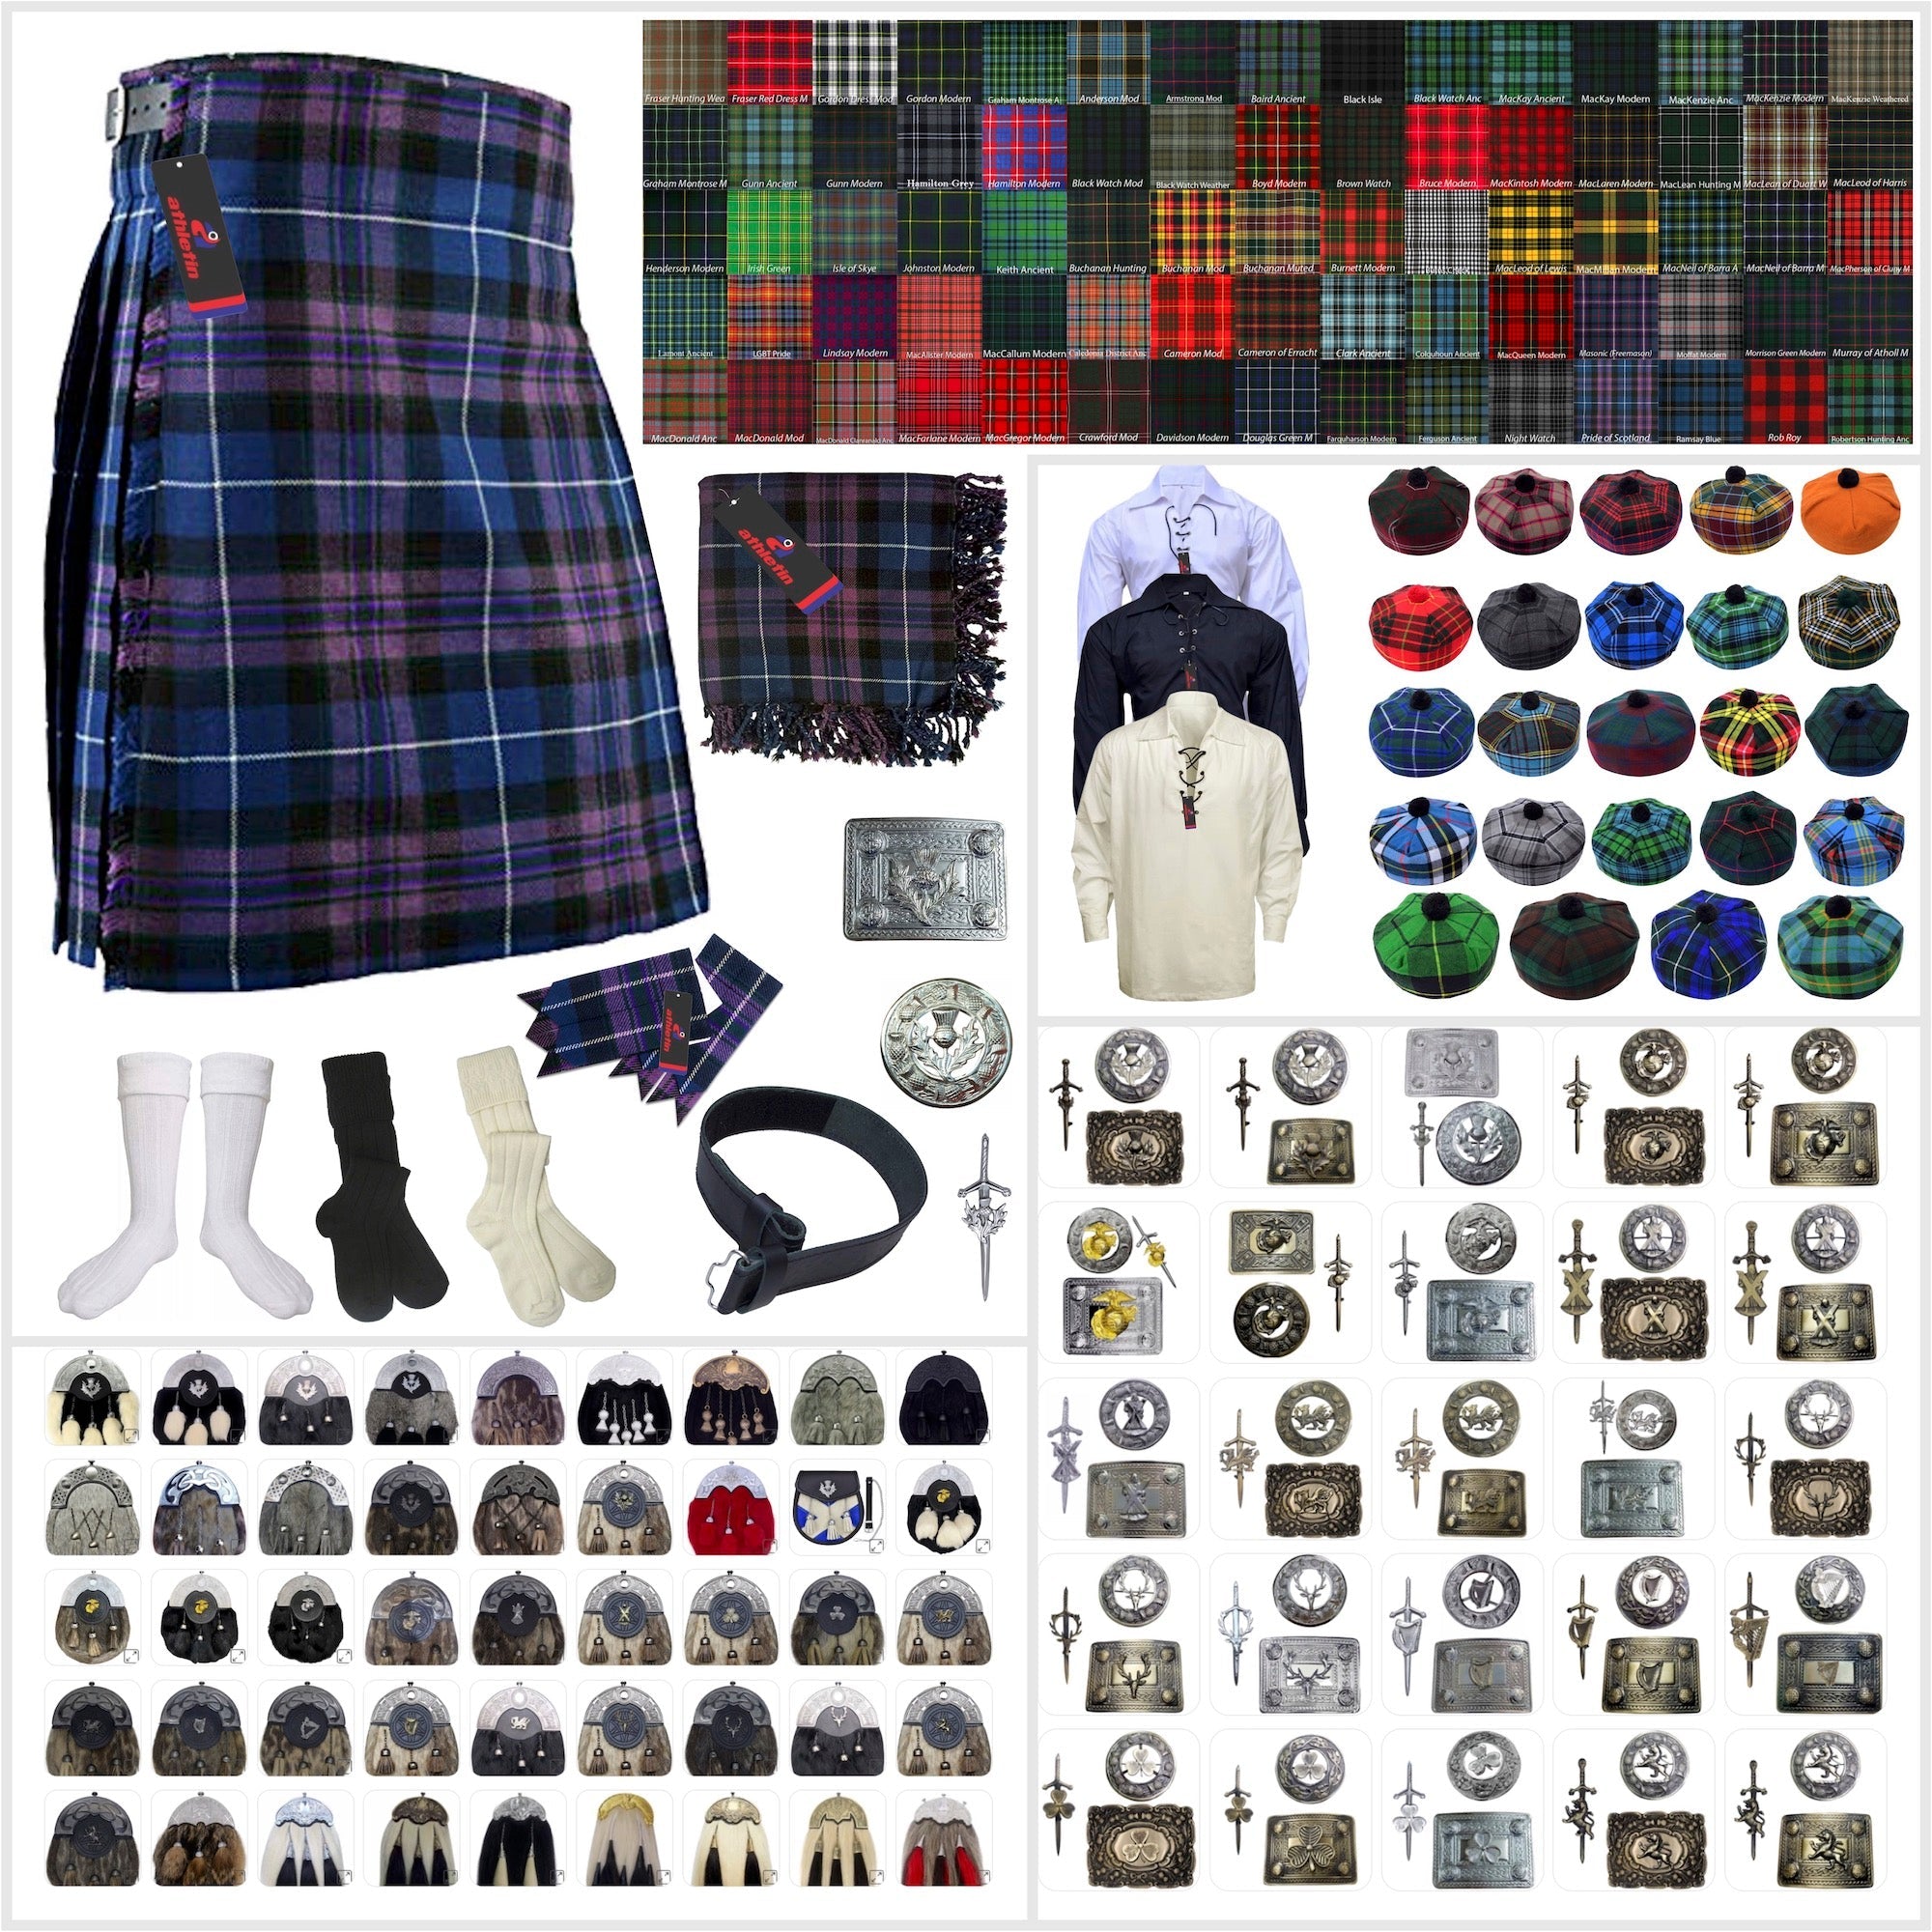 Elegant Pride of Scotland Tartan Kilt Outfit - Celebrate Your Scottish Roots